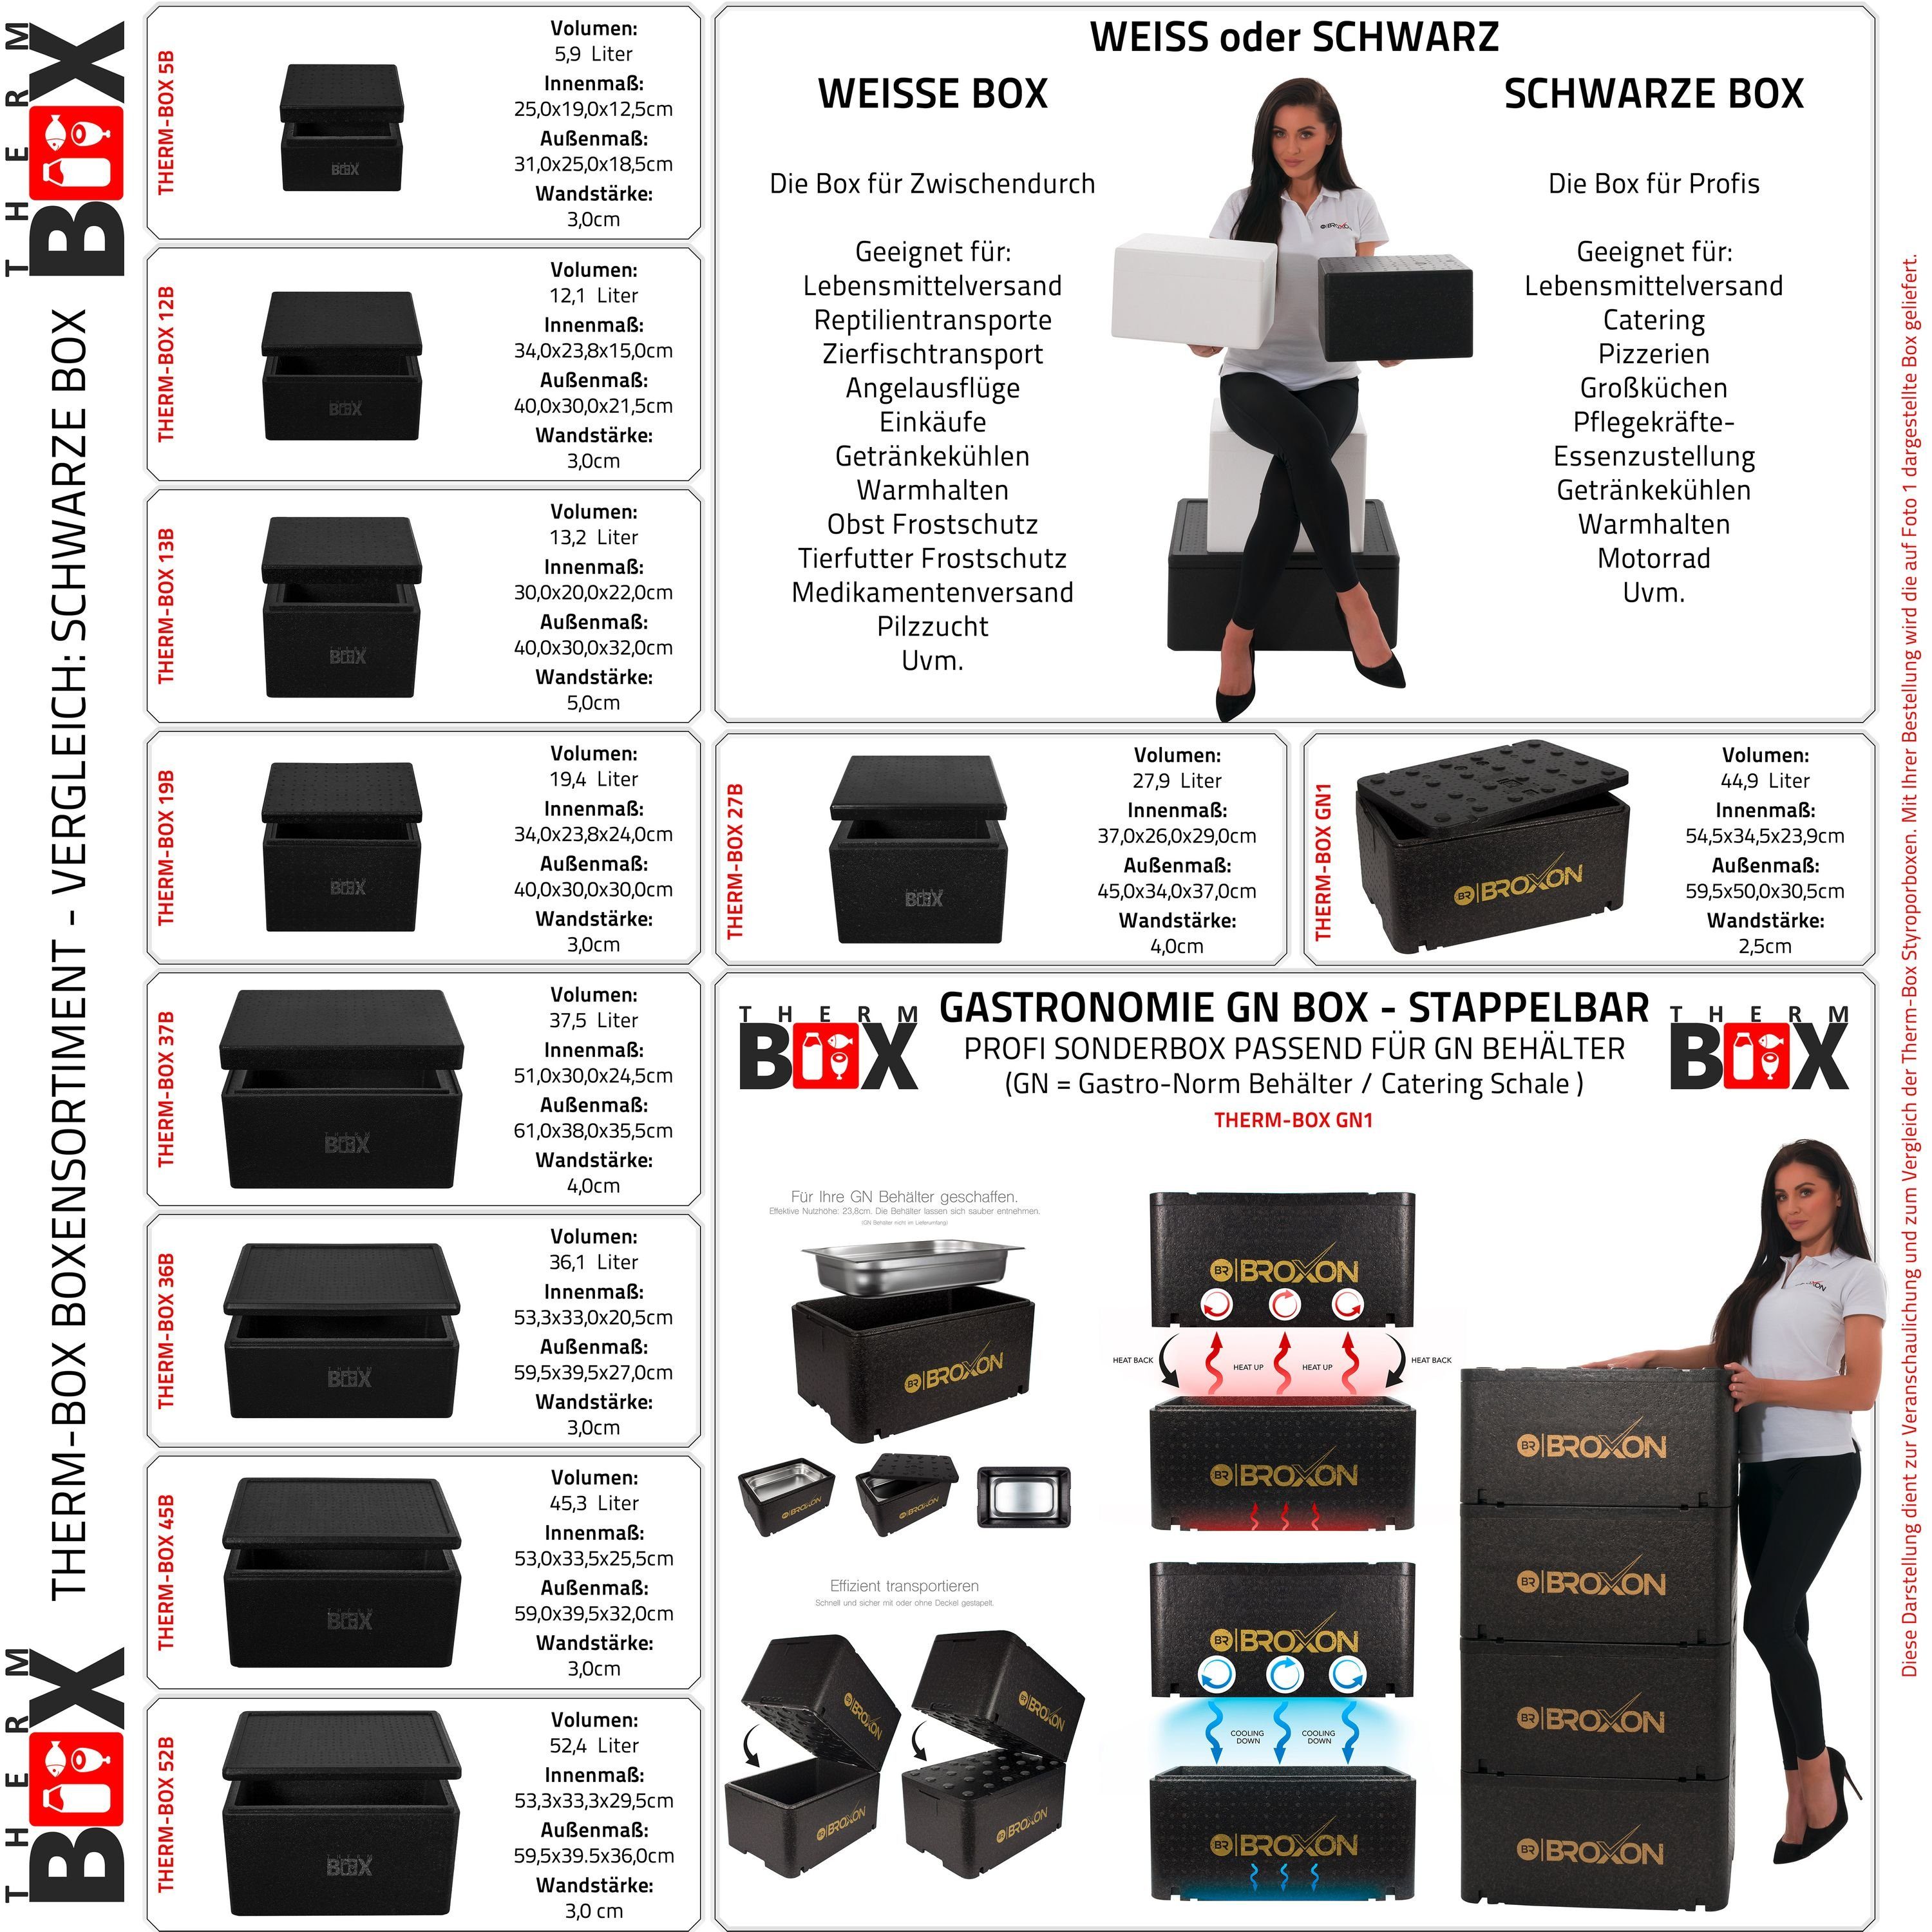 THERM-BOX Thermobehälter Profibox 37B, Styropor-Piocelan, Styroporbox mit Kühlbox Thermobox Warmhaltebox (0-tlg., Deckel Isolierbox Karton), Box 37,5L 4,0cm im Innenmaß:51x30x24cm Wiederverwendbar Wand: Volumen